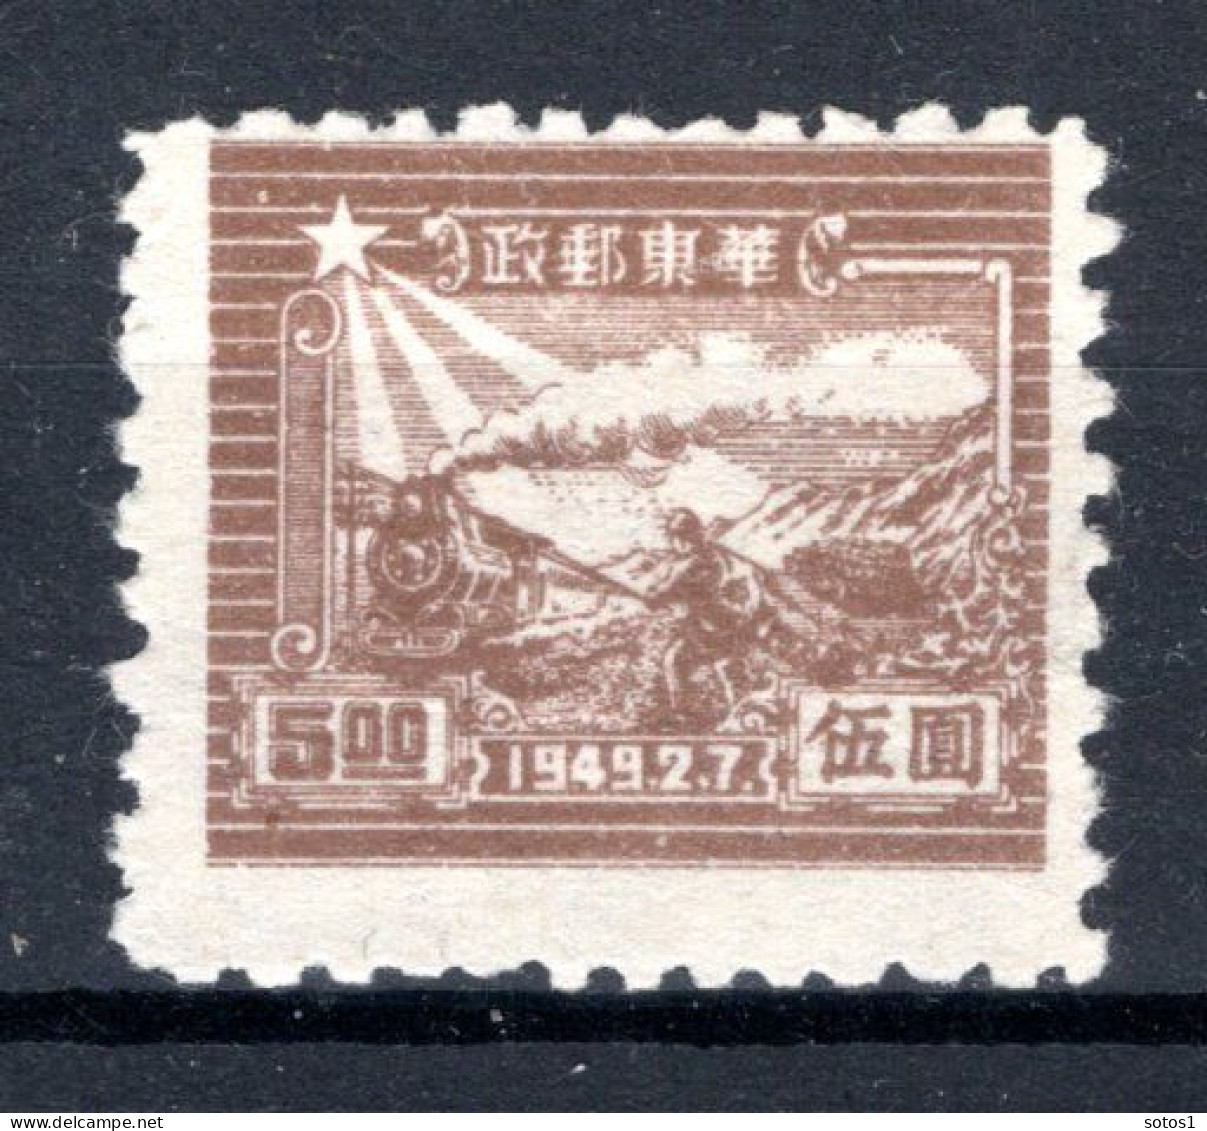 CHINA Yt. OR15 (*) Zonder Gom 1949 - Ostchina 1949-50